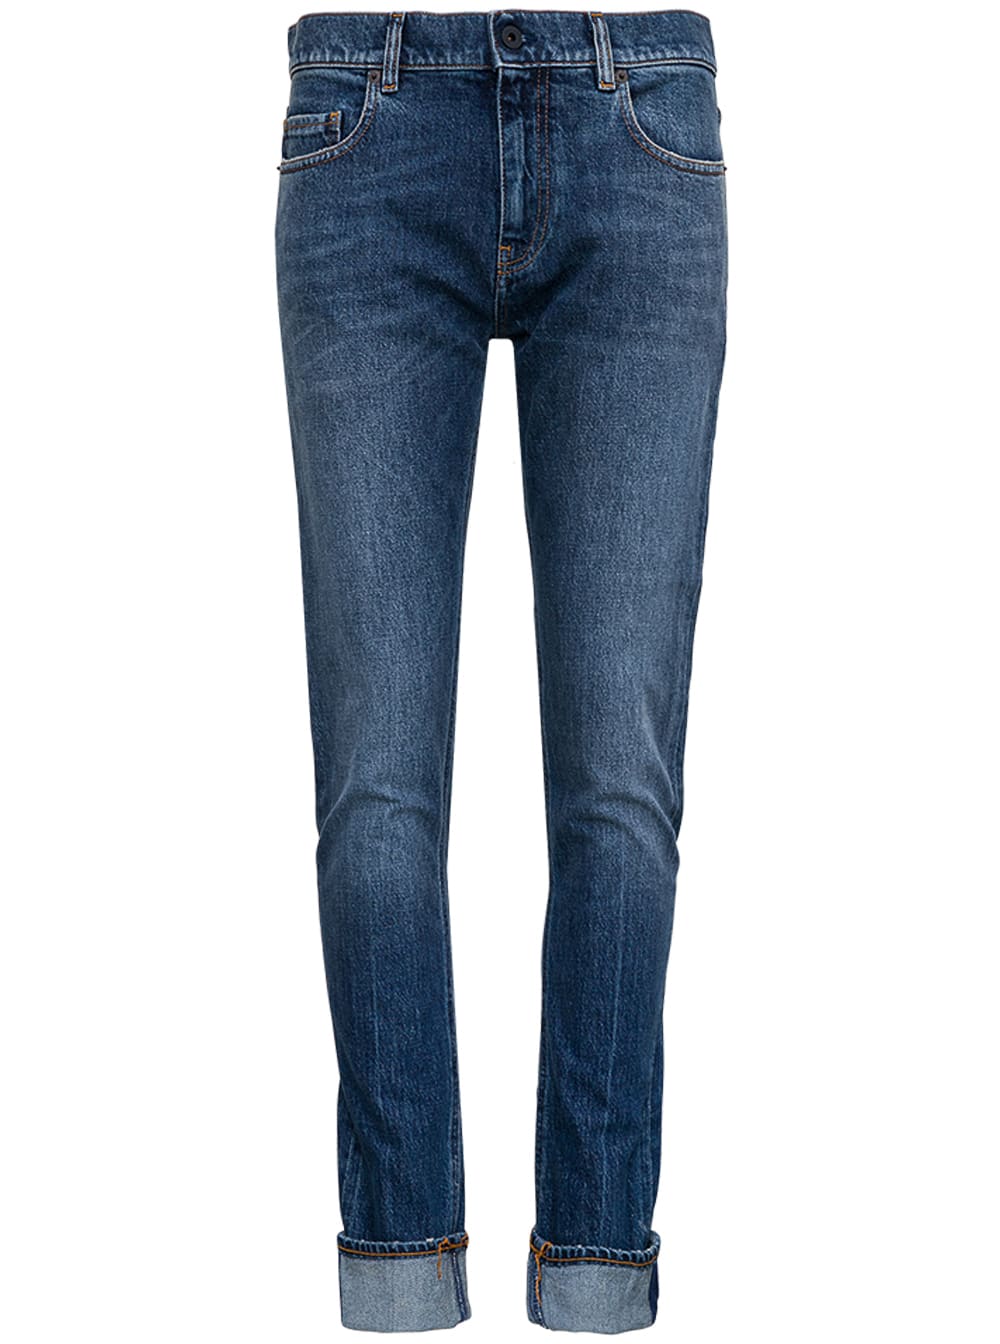 Pence Five Pockets Blue Denim Jeans